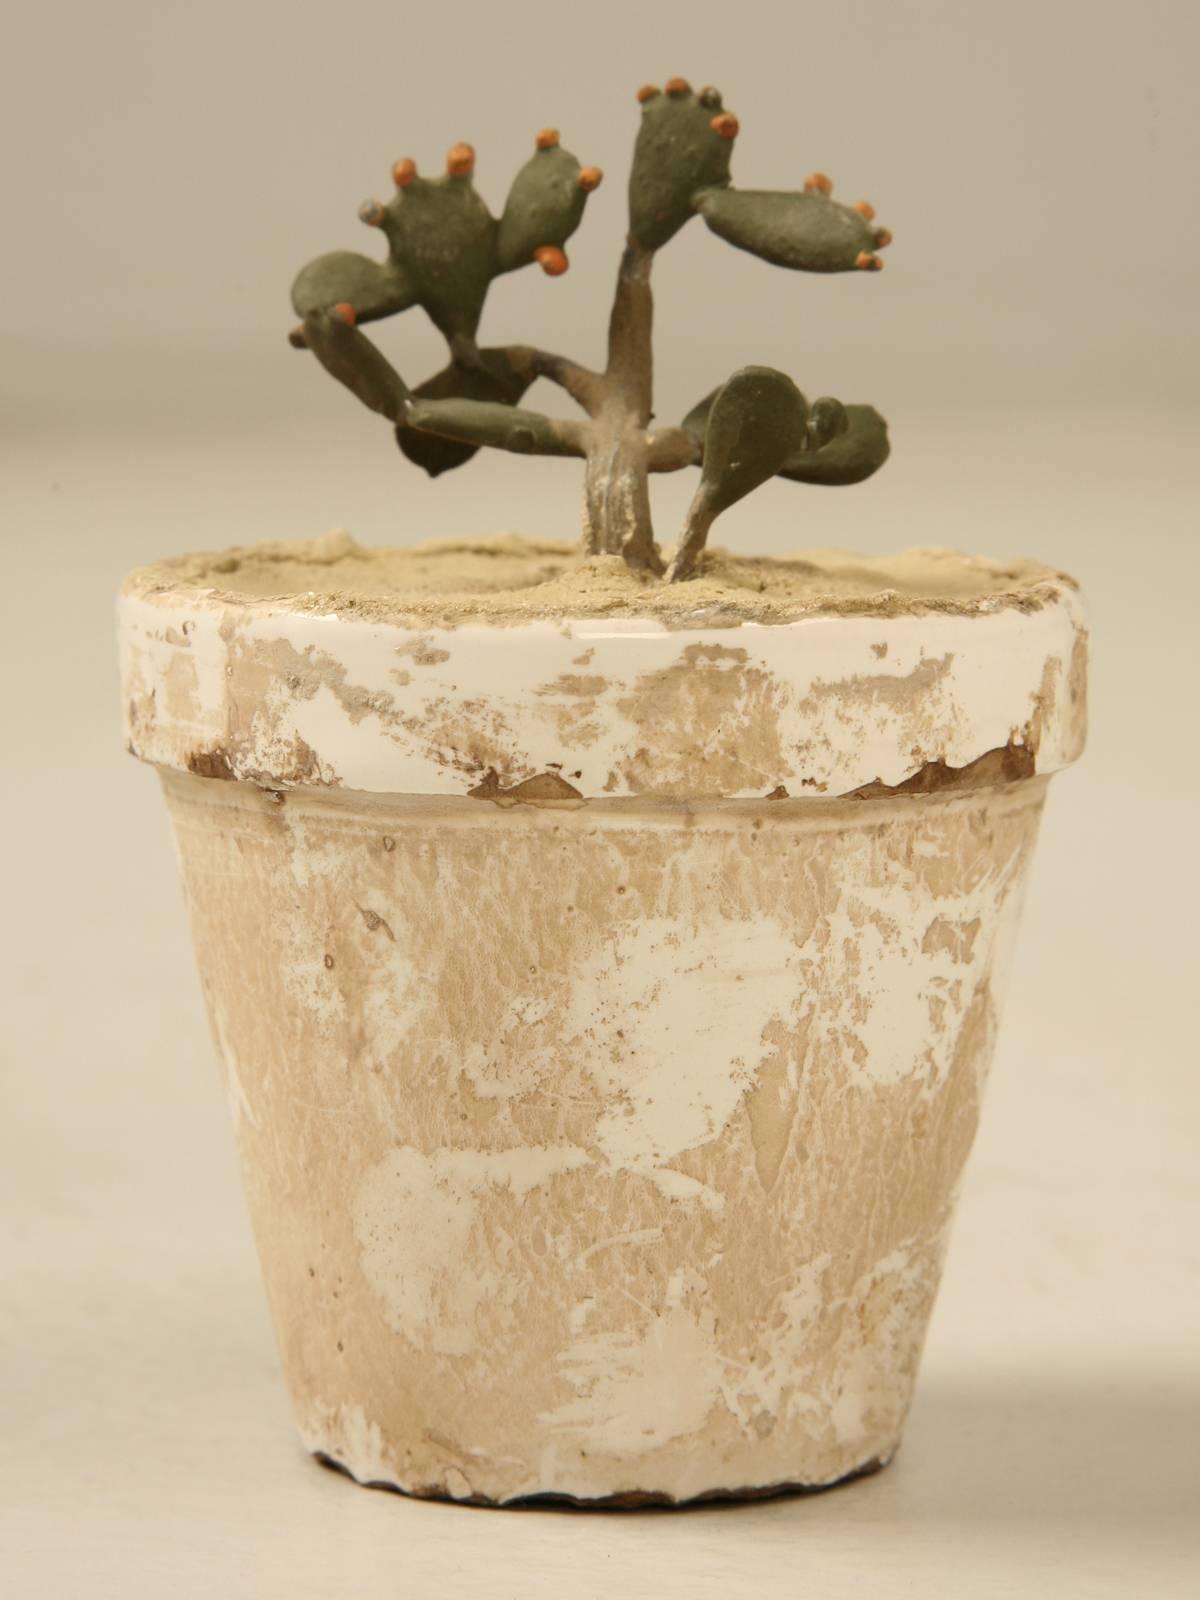 Metal Flowers in Clay Pots 5